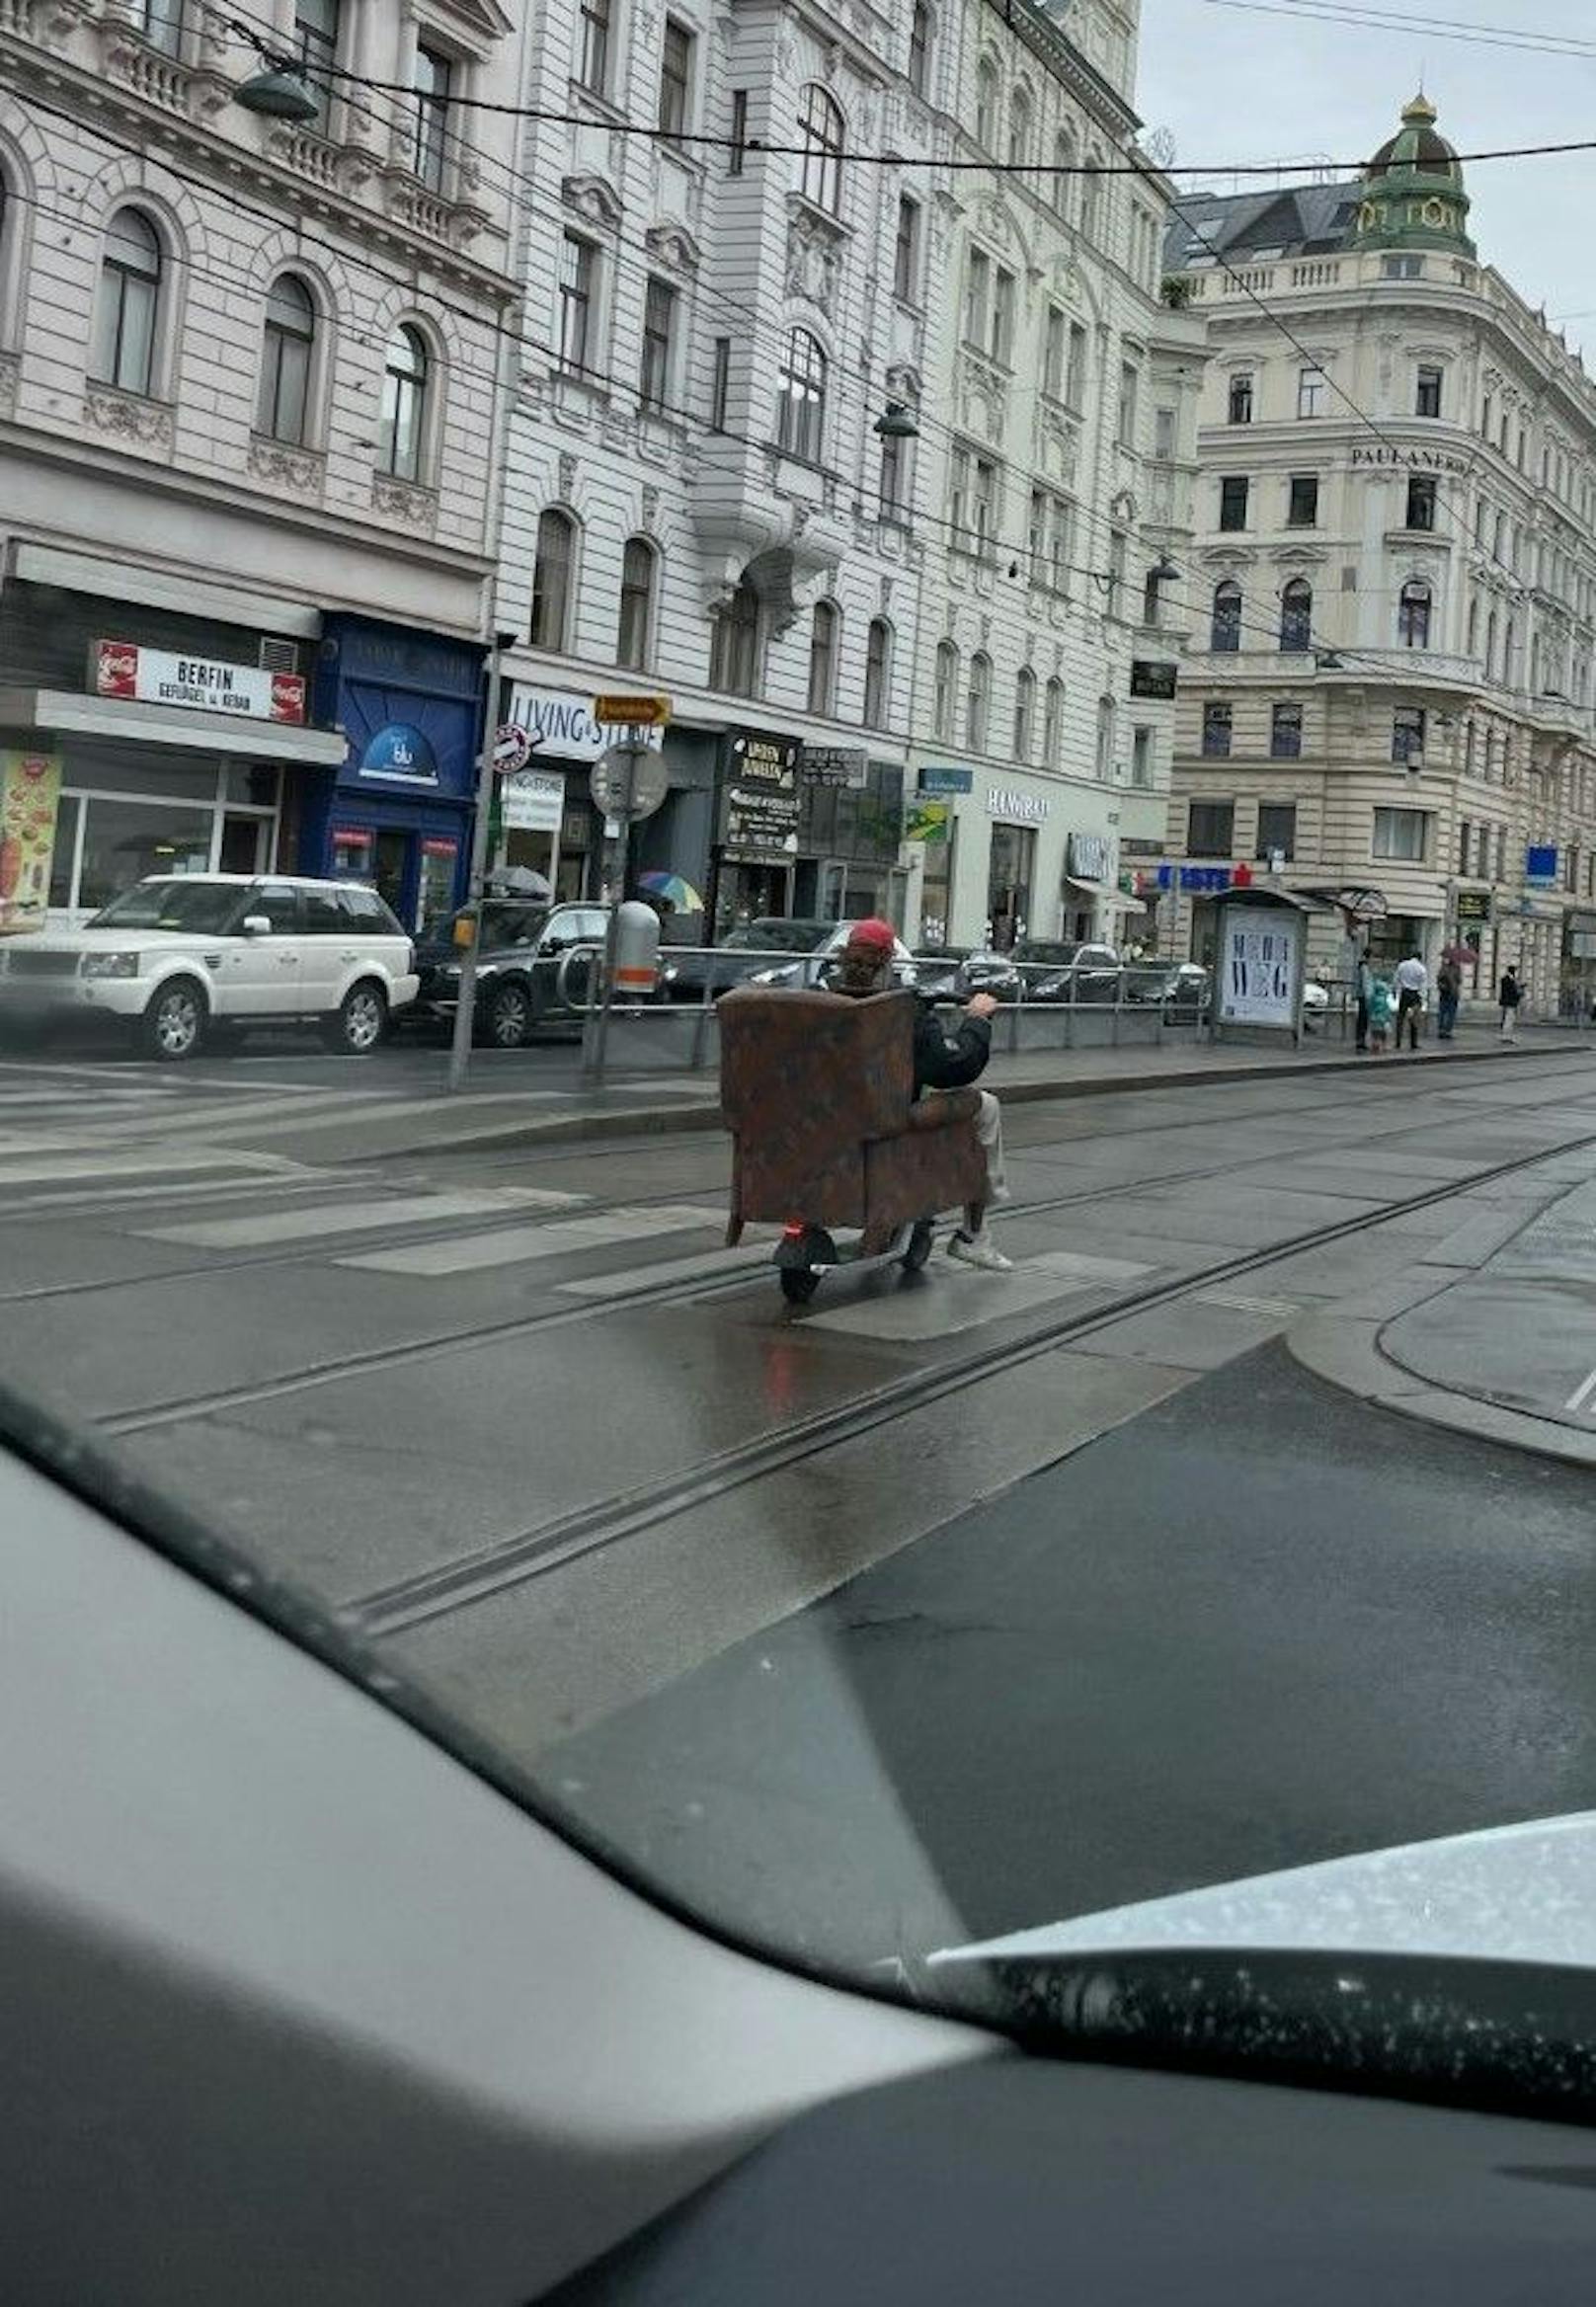 Wiener transportiert Sofa mit E-Roller